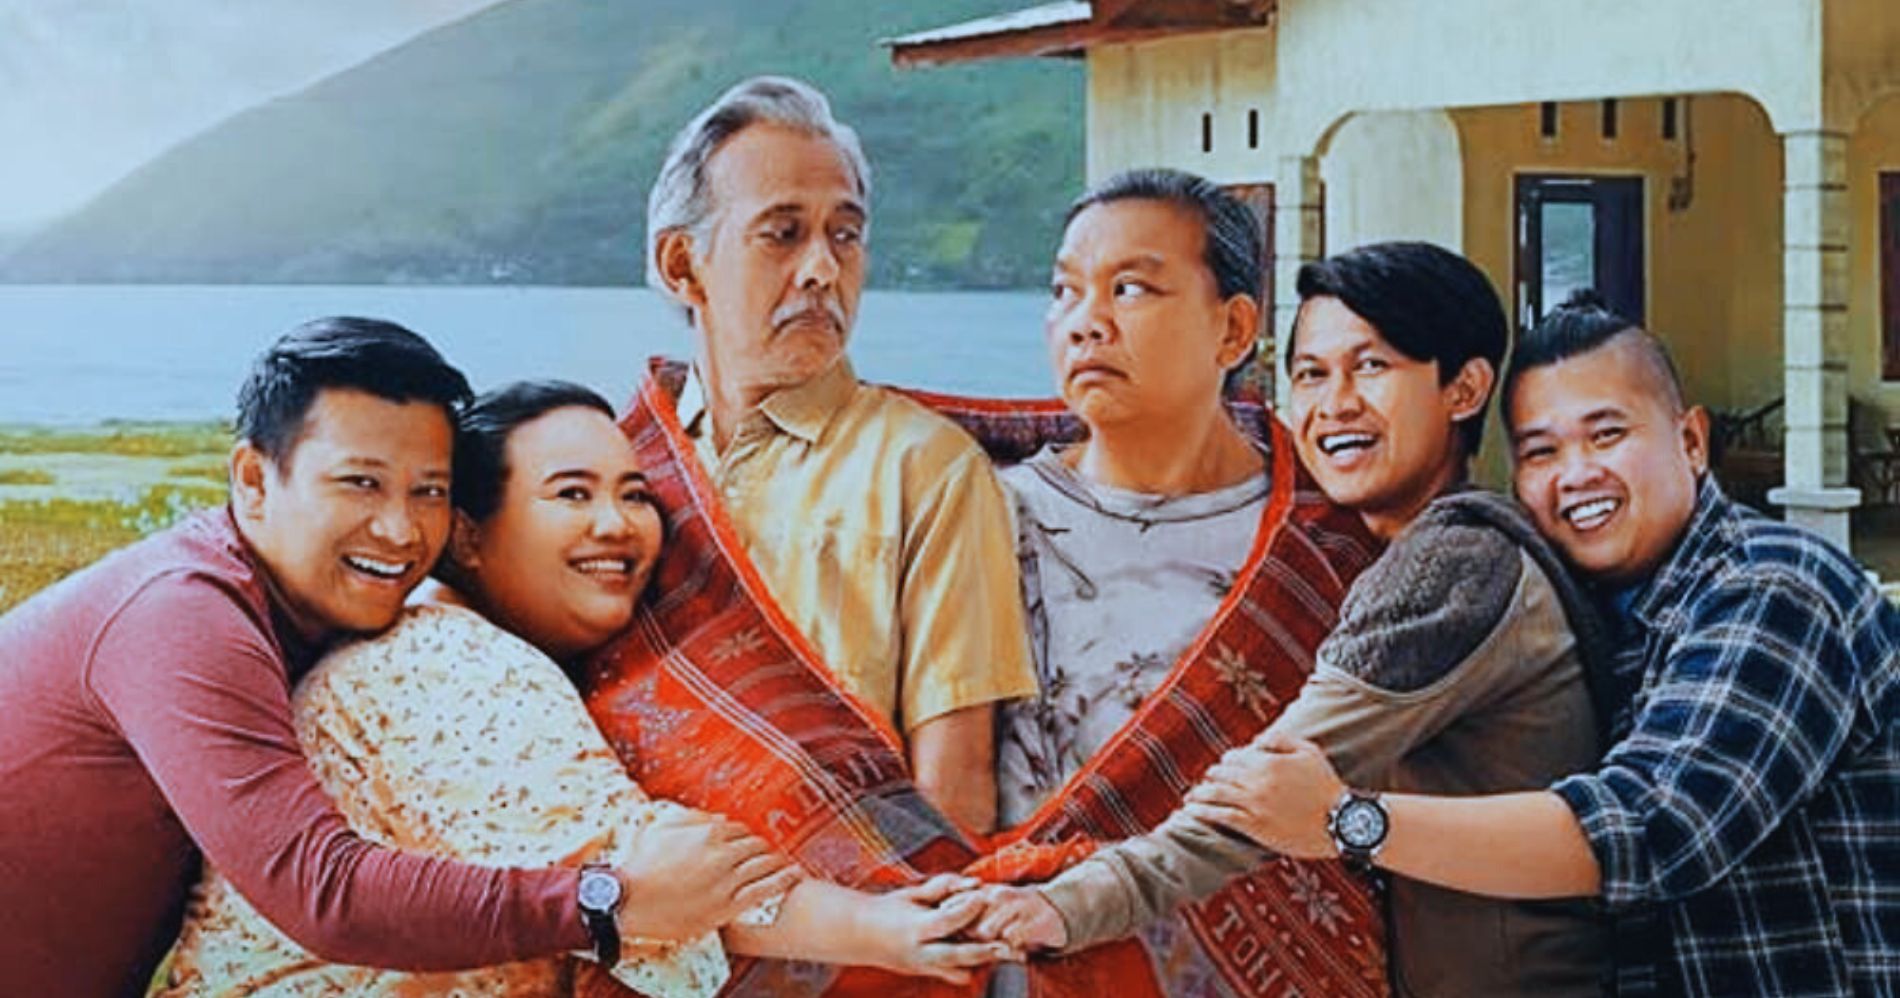 Film Ngeri-Ngeri Sedap yang Mengandung Budaya Batak - Image: IMBd